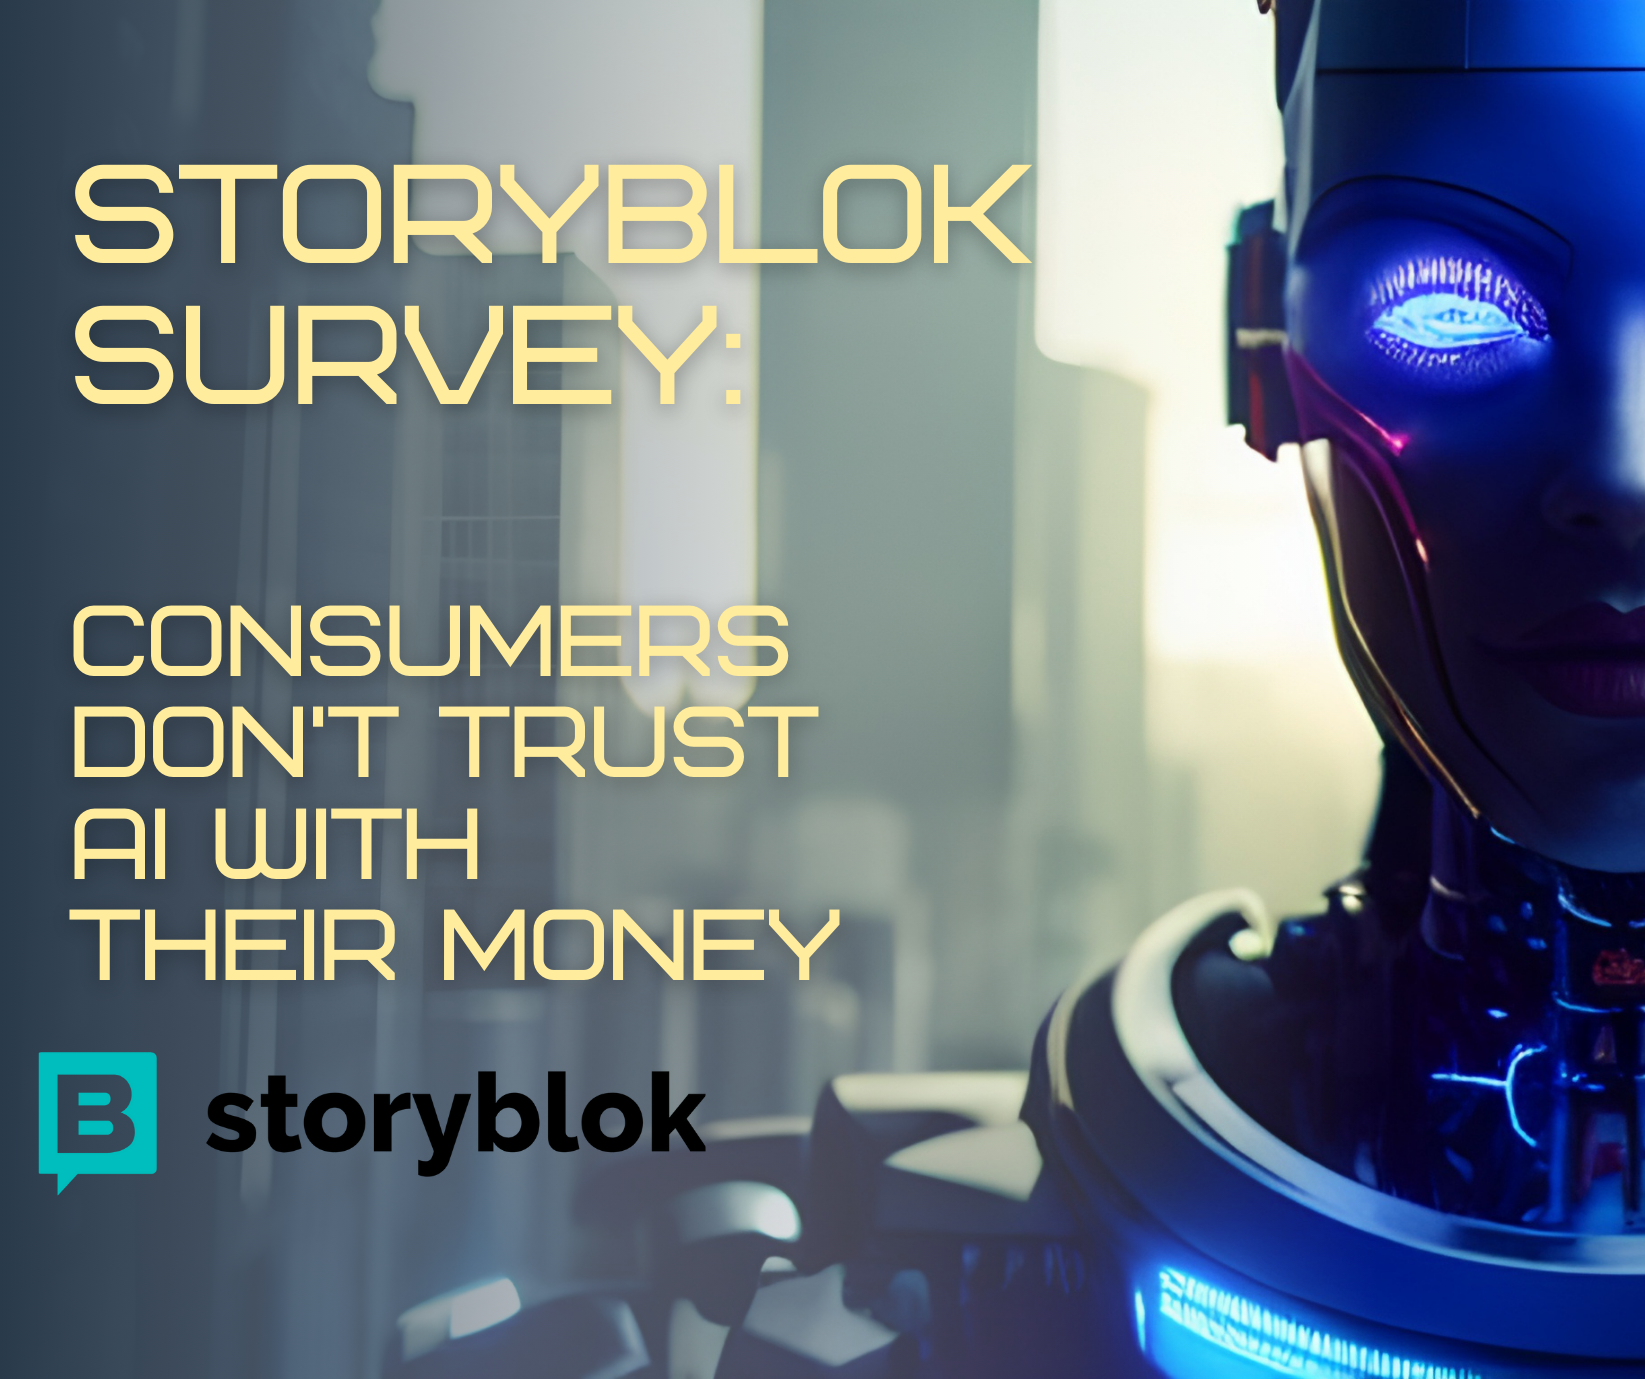 Storyblok's Survey Unveils Shocking Consumer Trends, Exposing Website Trust and AI Skepticism
